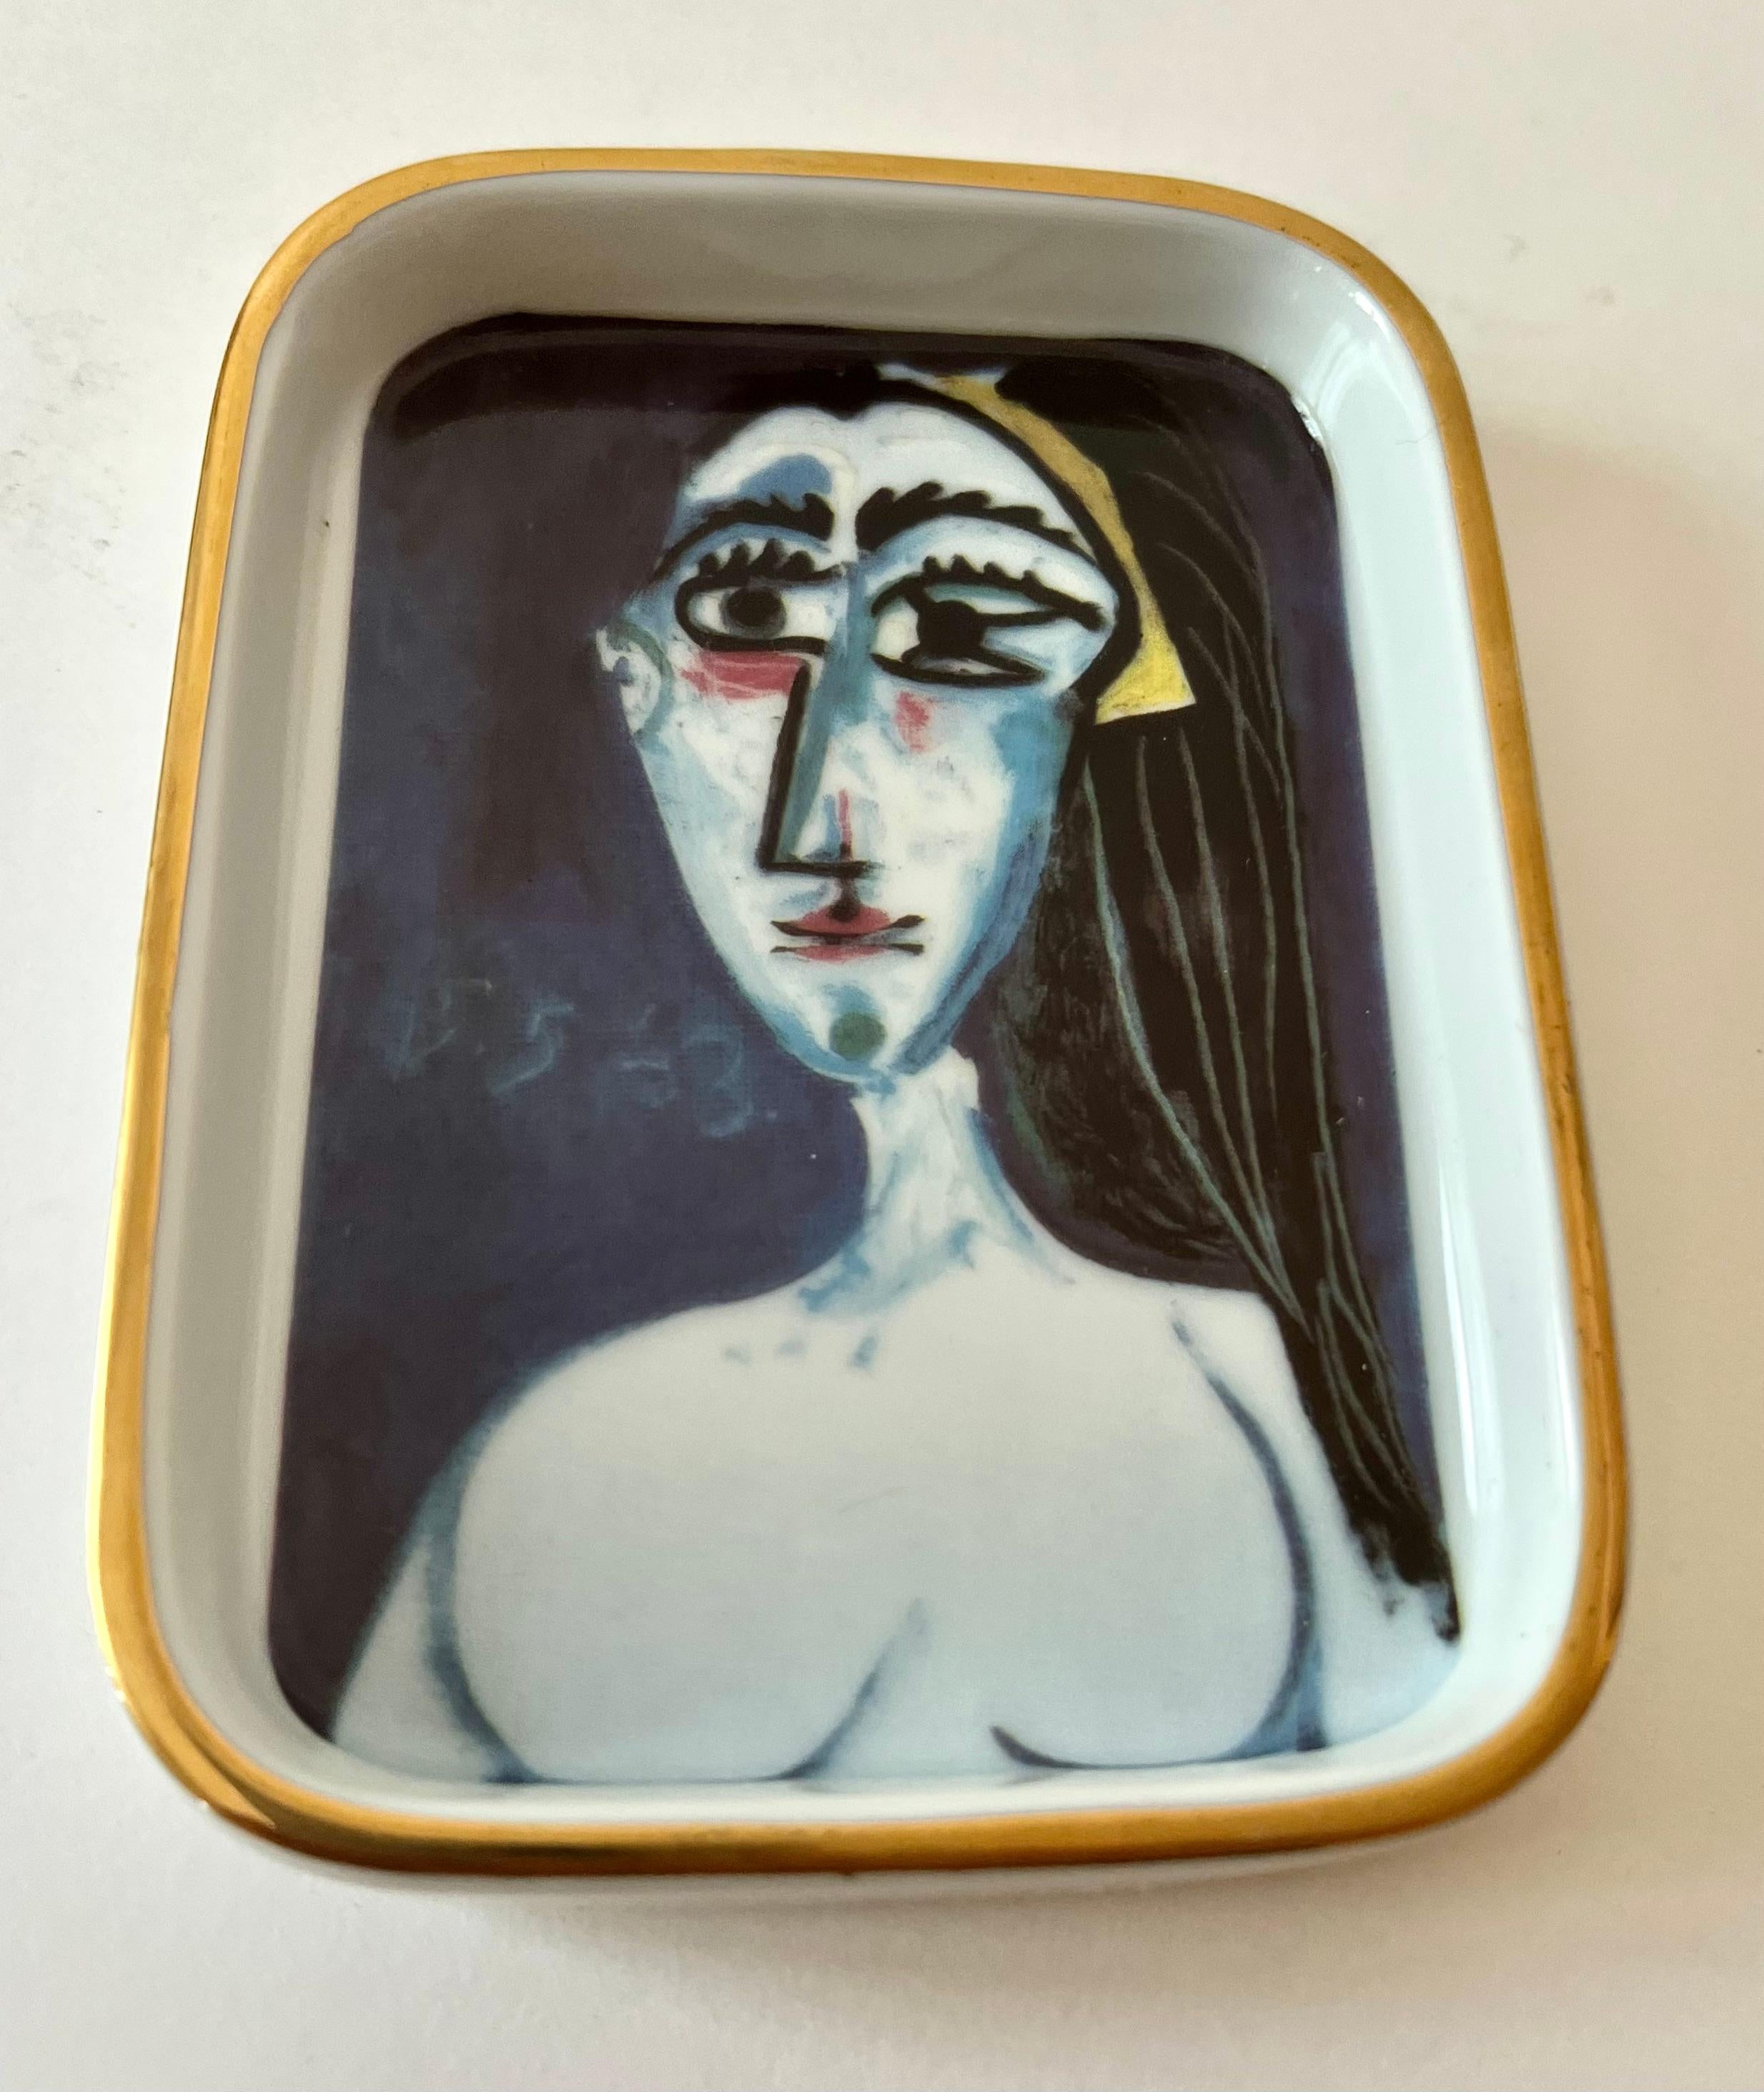 20th Century Change or Decorative Bowl with Picasso Image Busta De Femme Nue, Face